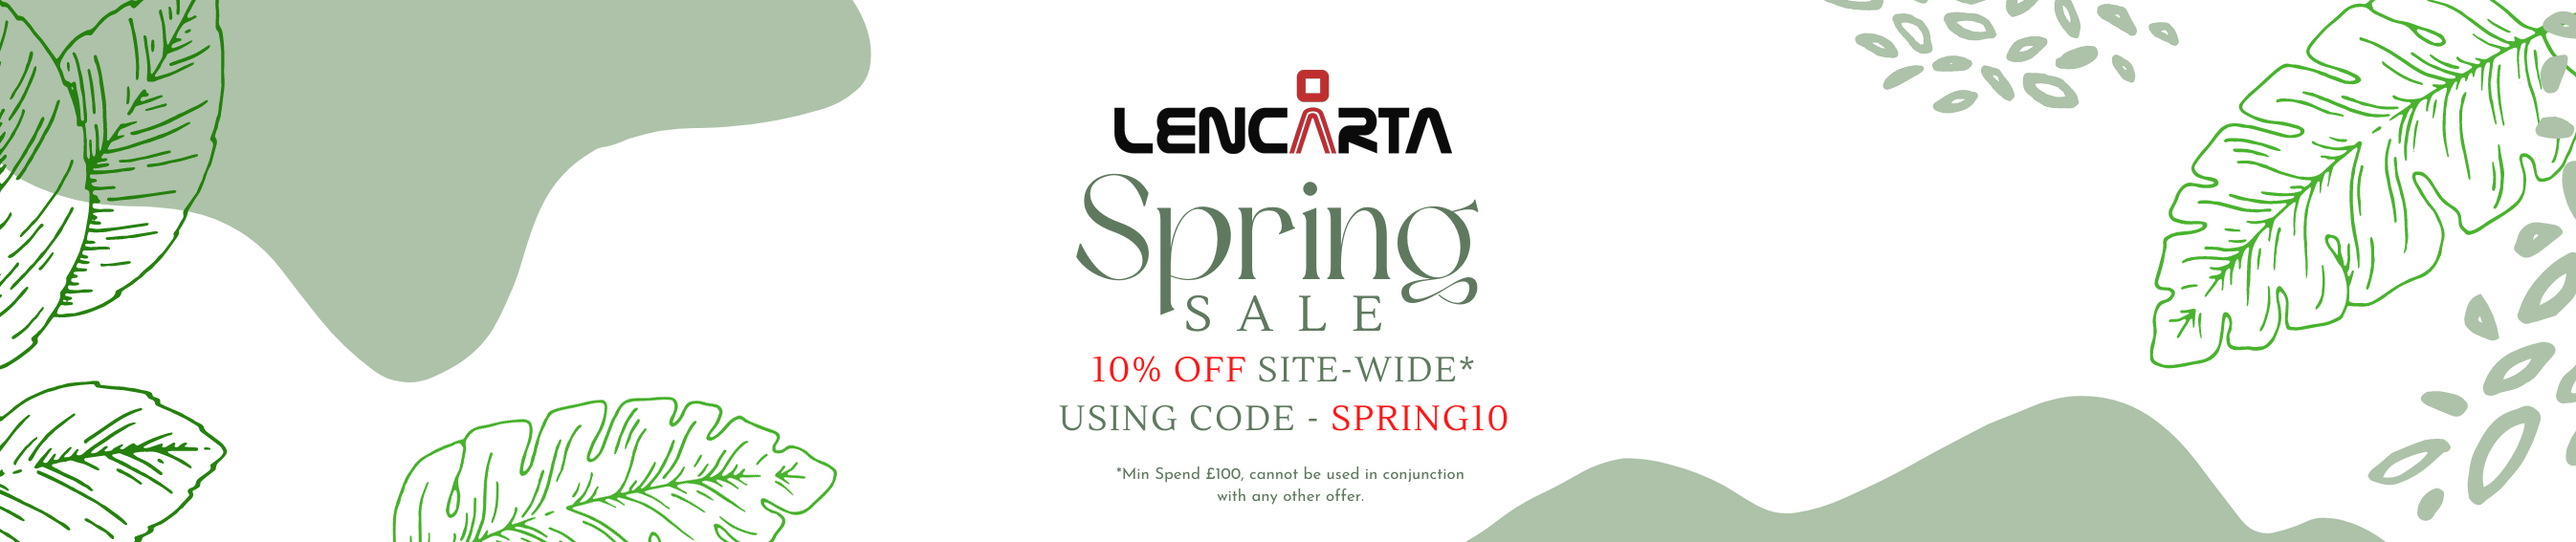 Lencarta Spring Sale 10% off Site Wide